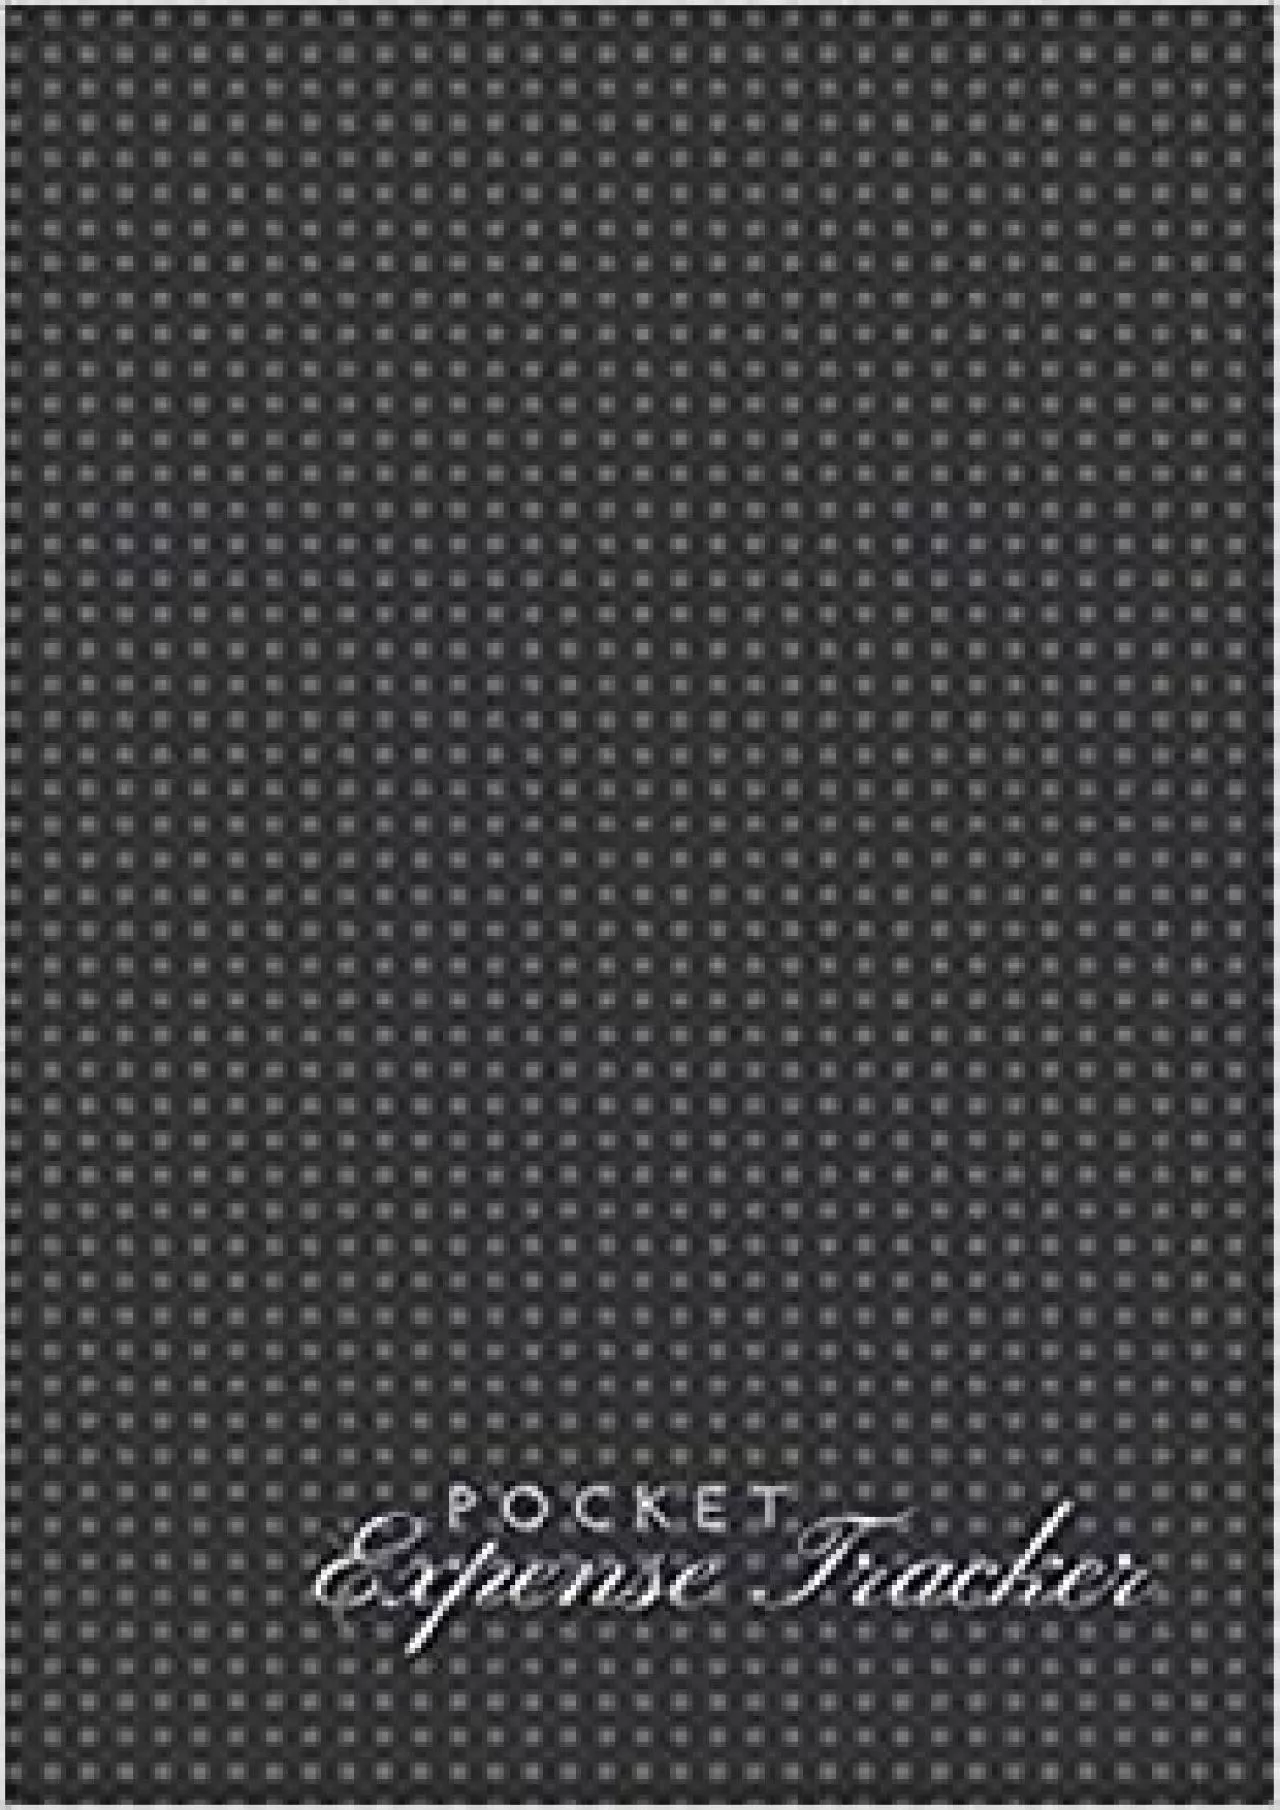 Pocket Expense Tracker: Mini Expense Tracker Book